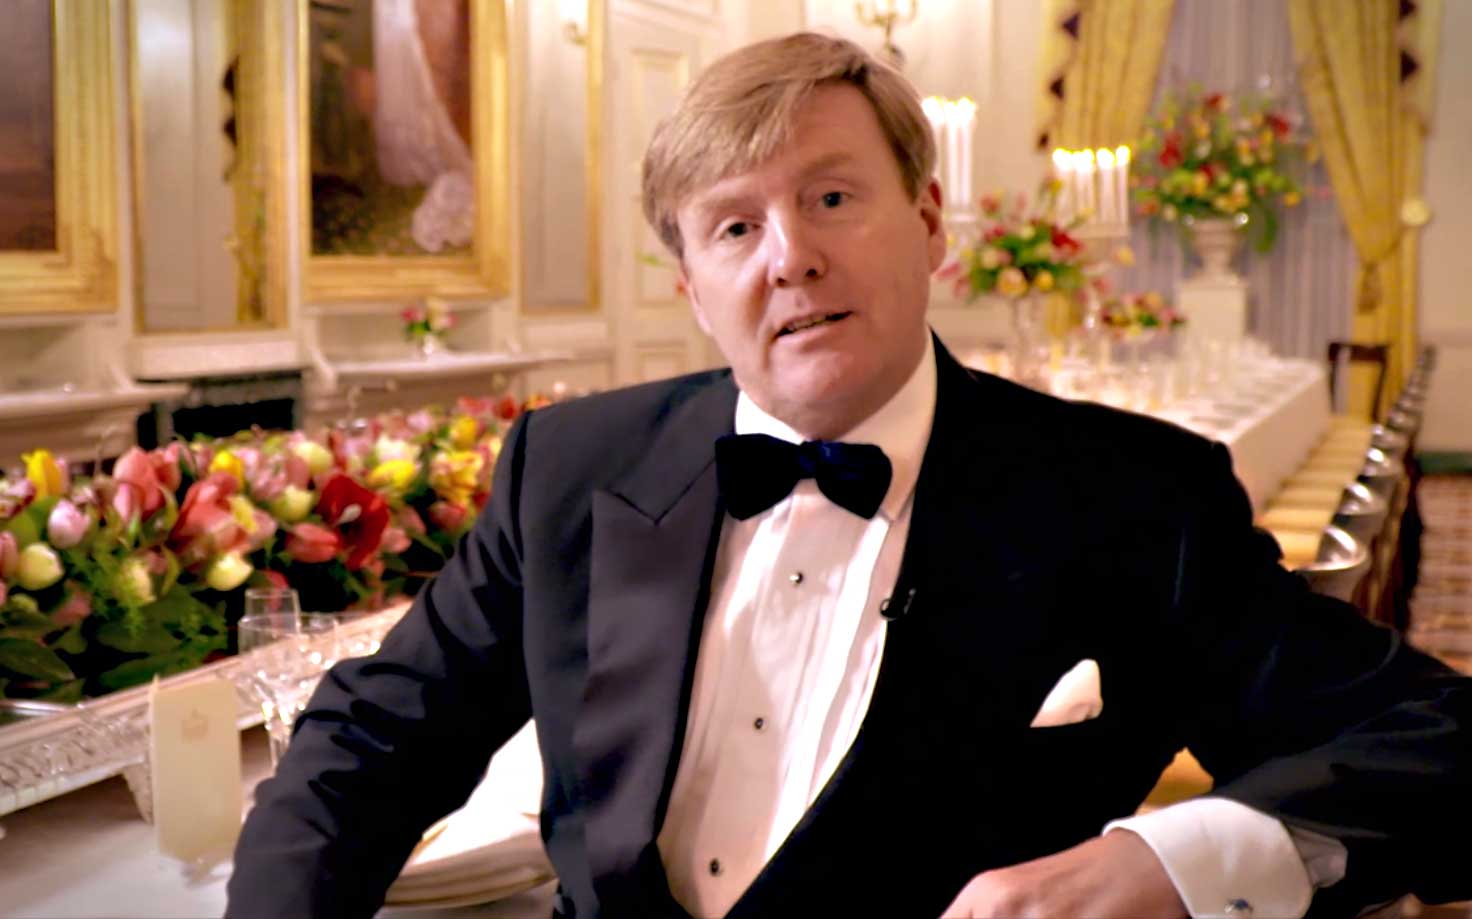 Koning Willem-Alexander nodigt 150 Nederlanders uit voor diner